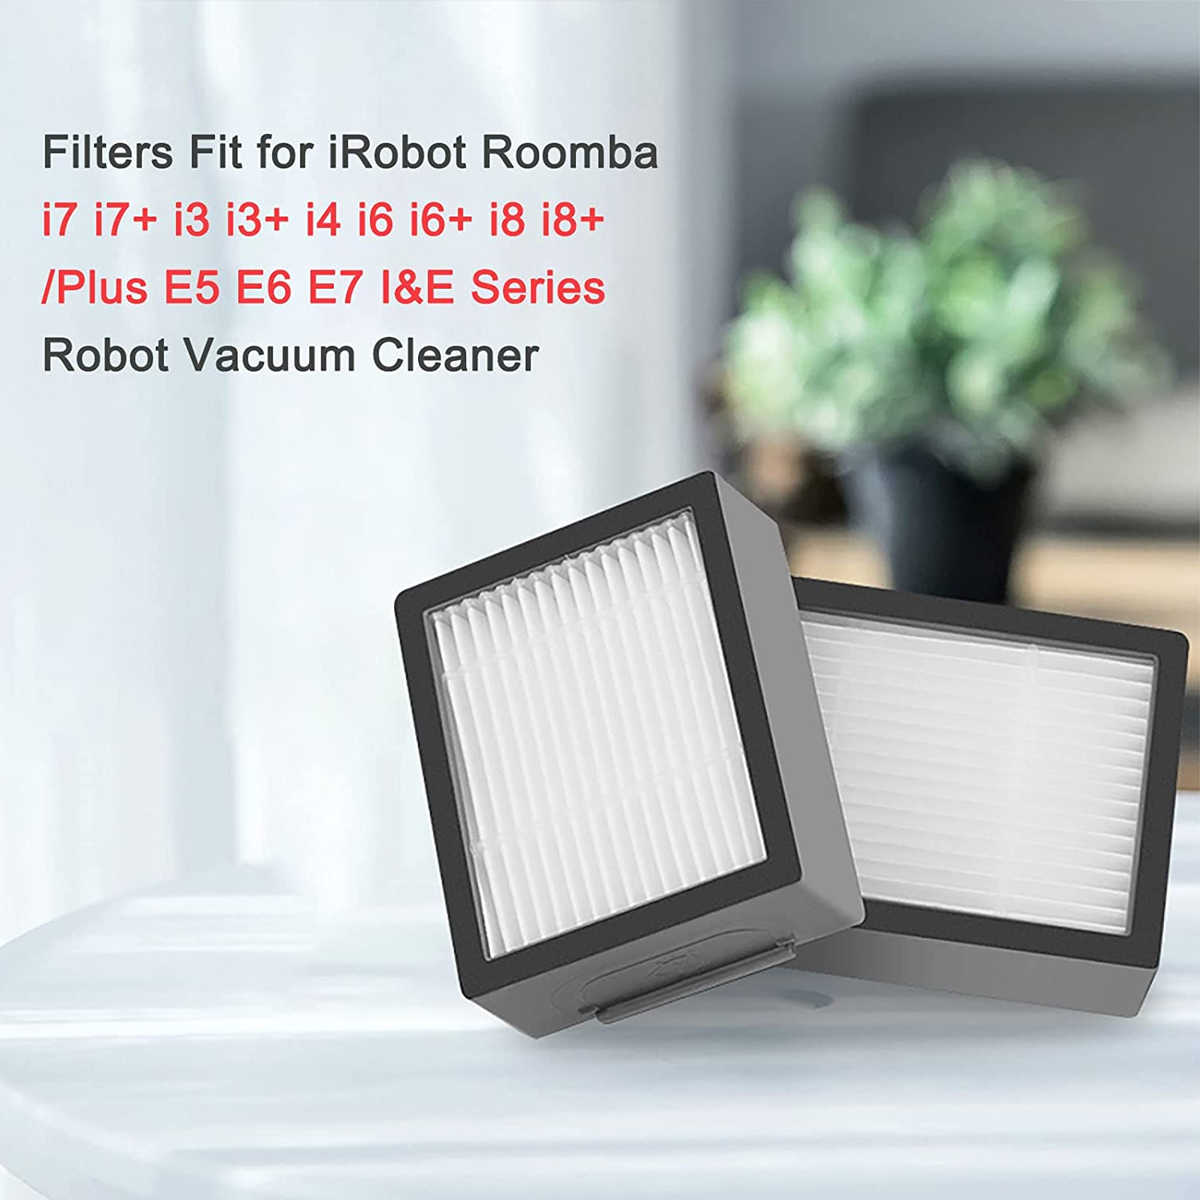 Vhbw Filtre compatible avec iRobot Roomba E5, E6, E7, i7, i7+, i7